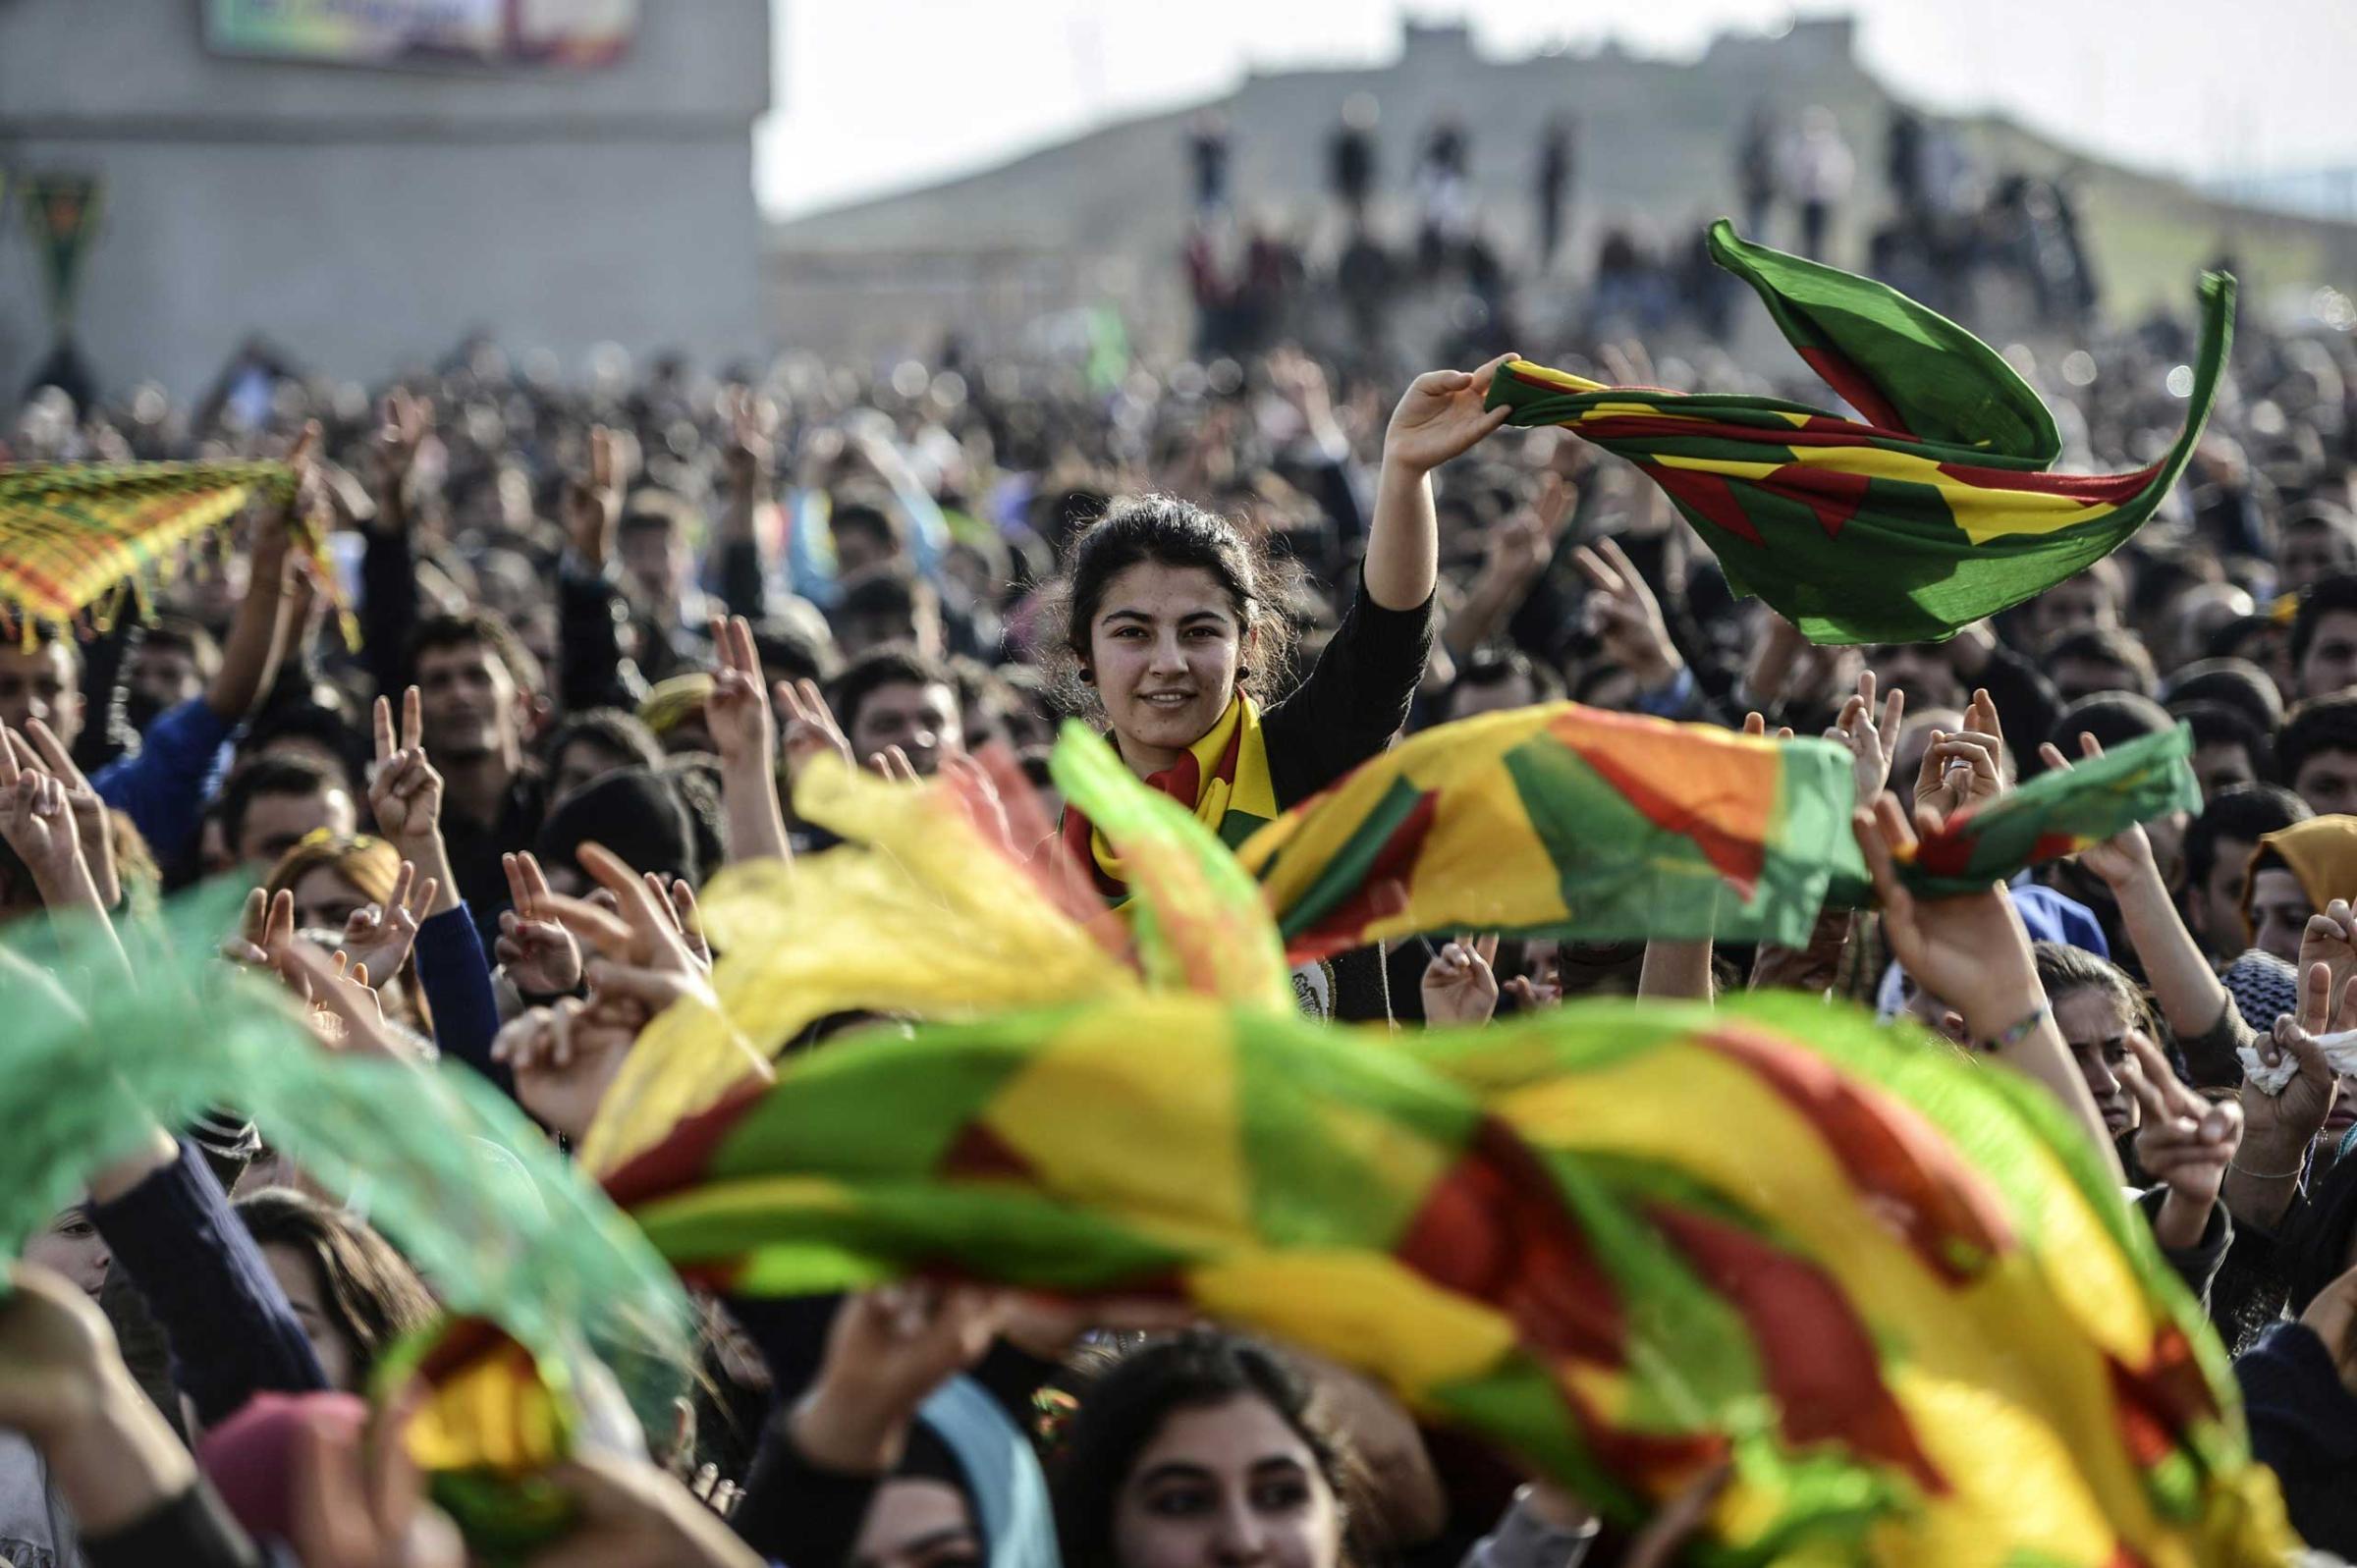 Kurdish people attend a celebration rally near the Turkish-Syrian border in Suruc, Jan. 27, 2015.